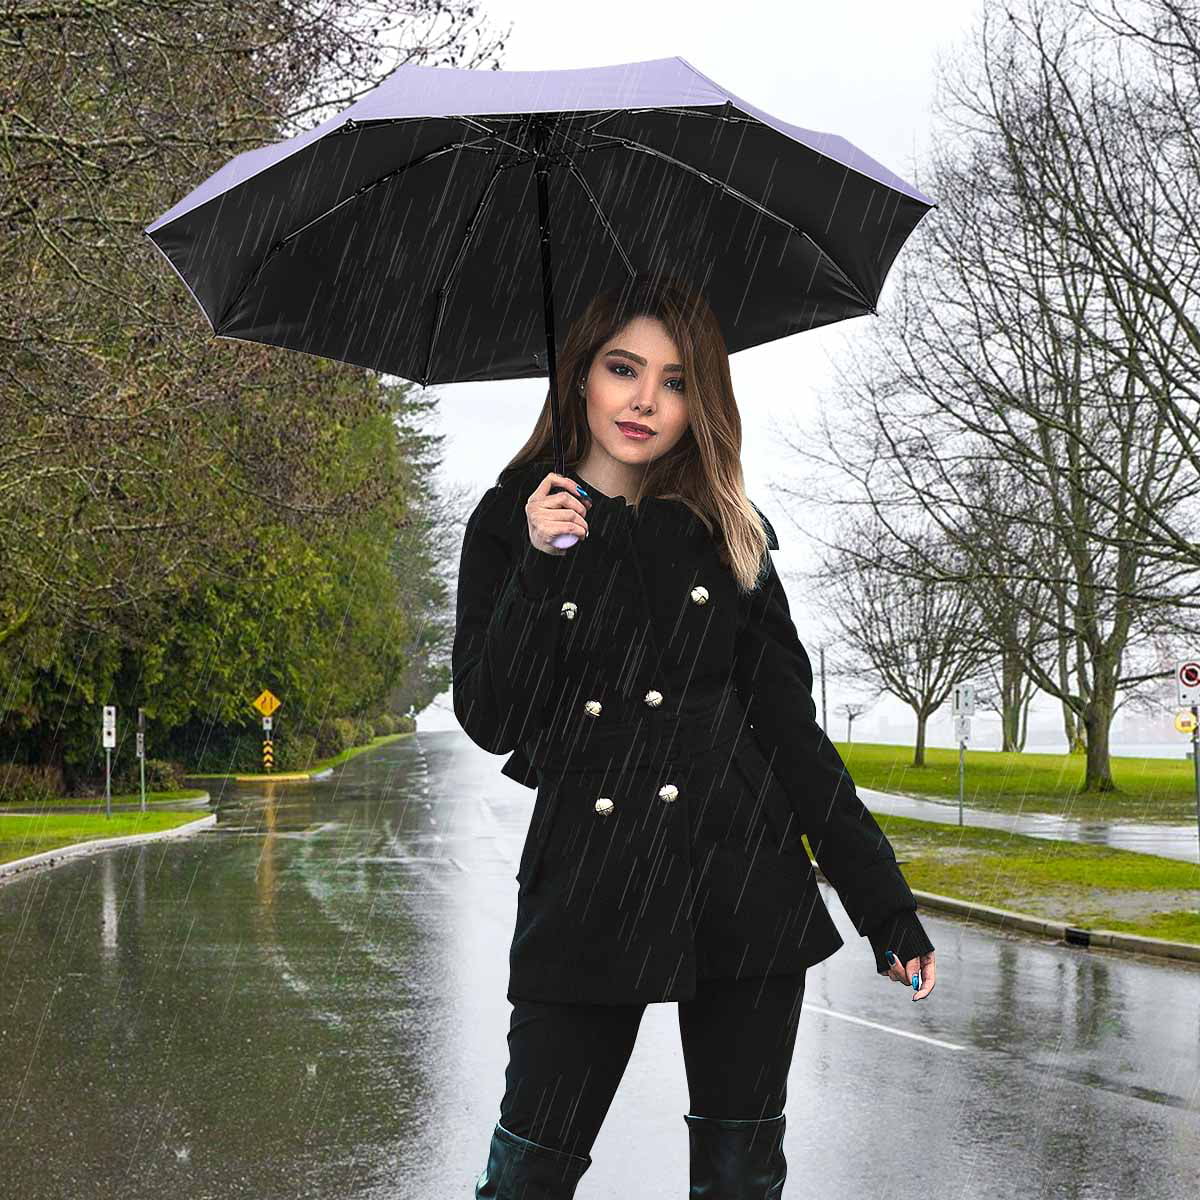 Hoogtecly Small Travel Umbrella Perfect for Travel Lightweight Portable Parasol Outdoor Sun&Rain Umbrellas 